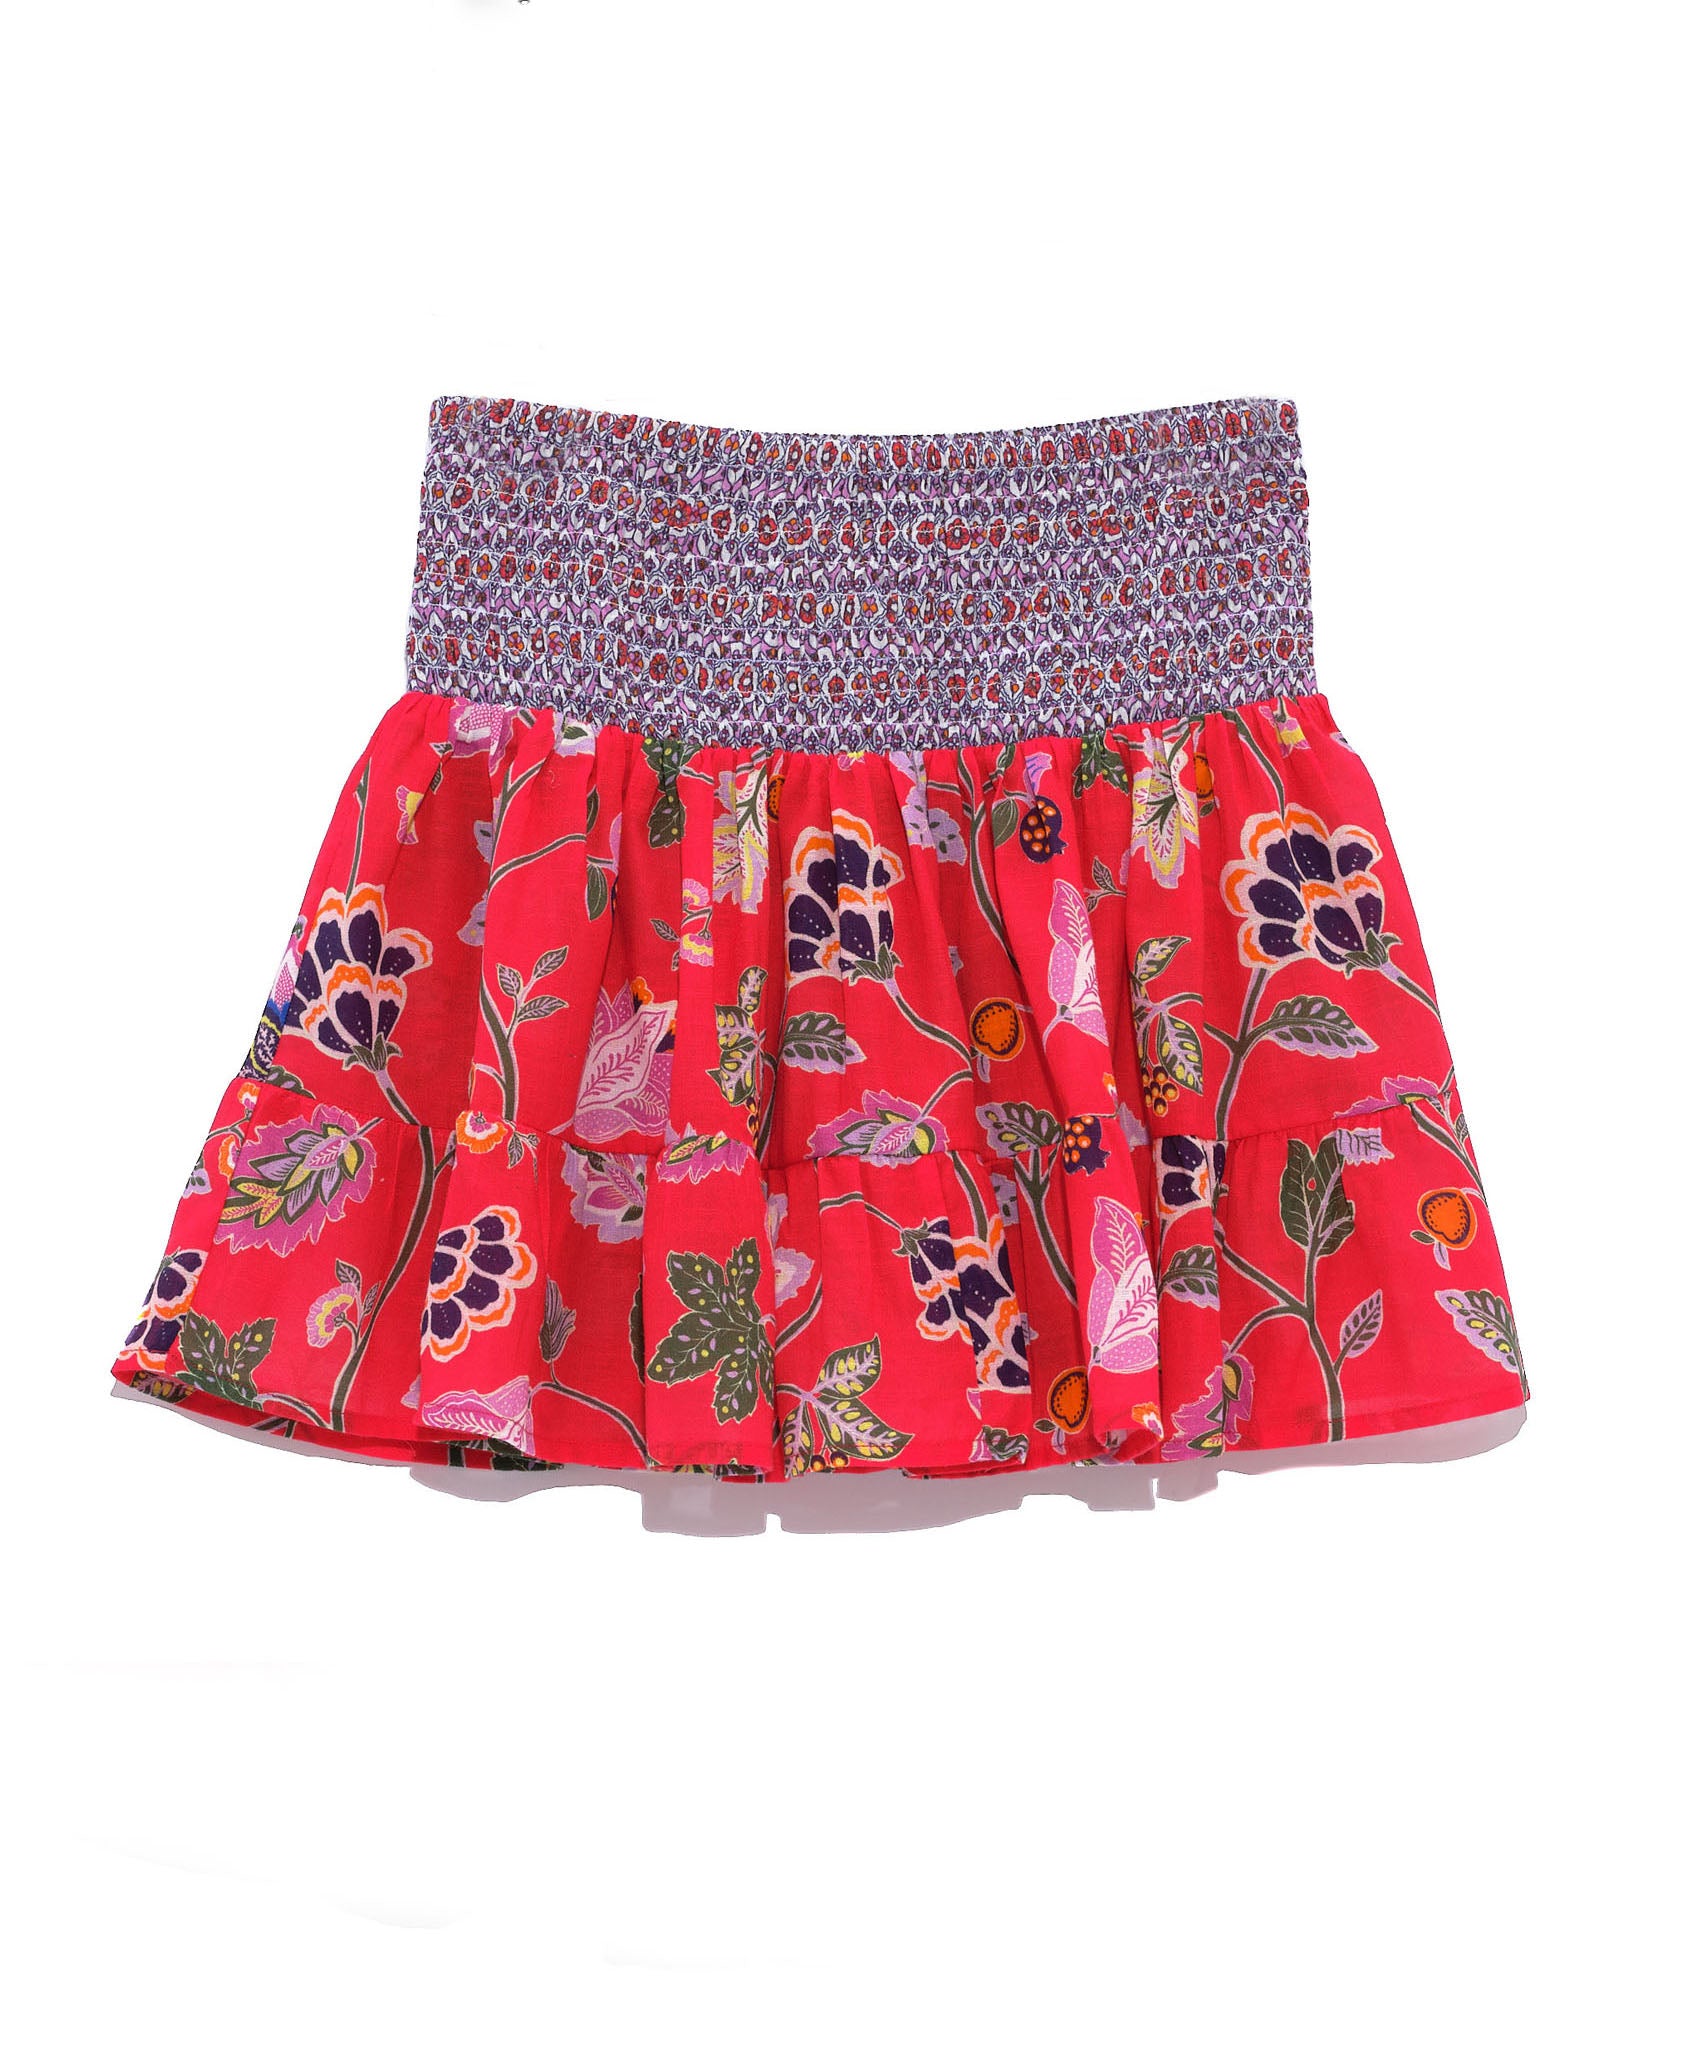 Wanderlust Mini Skirt in color Hibiscus